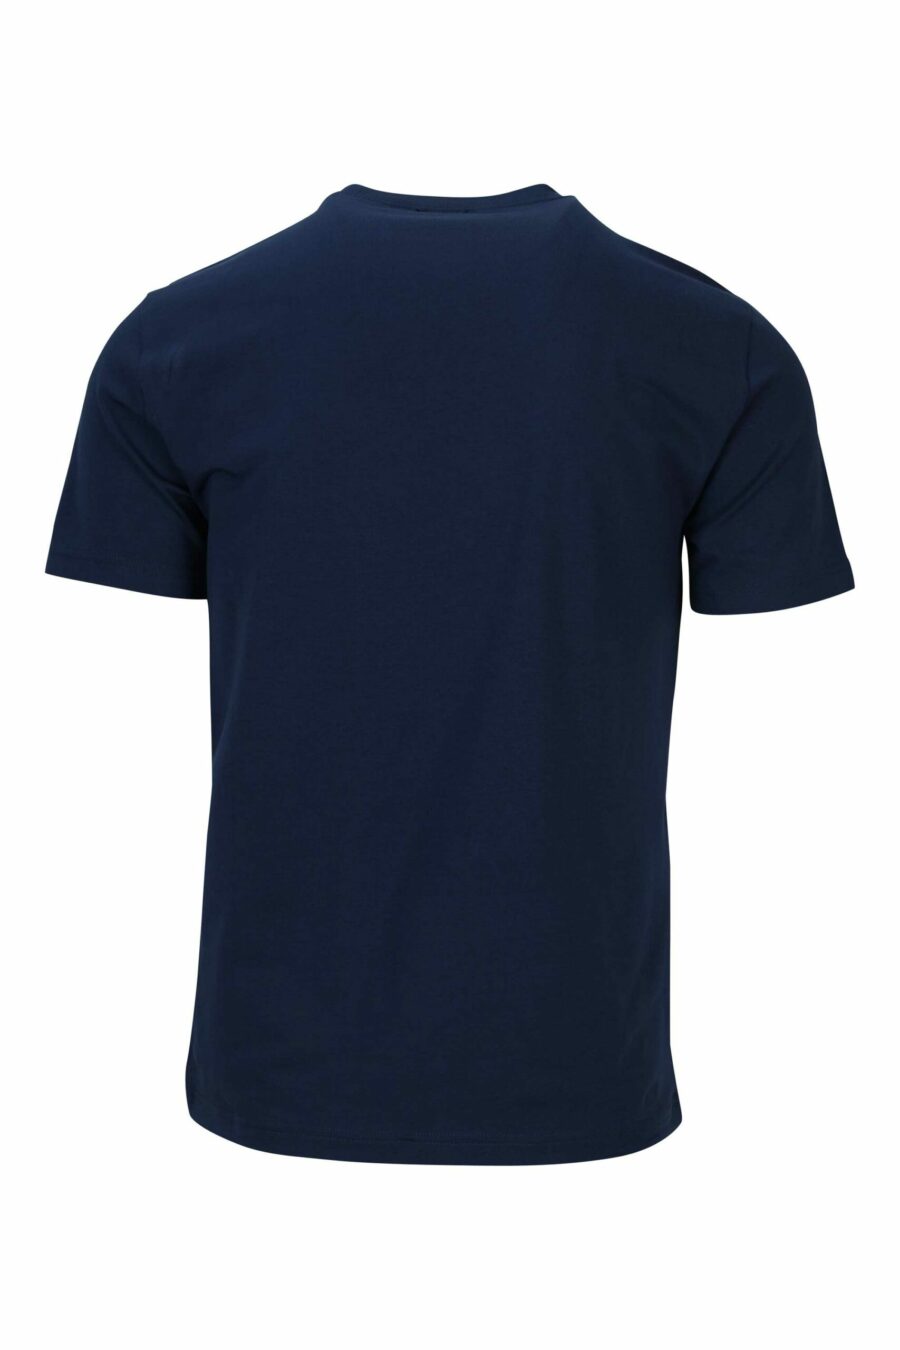 T-shirt bleu foncé avec maxilogo "lux identity" orange fluo - 8058947491445 1 scaled